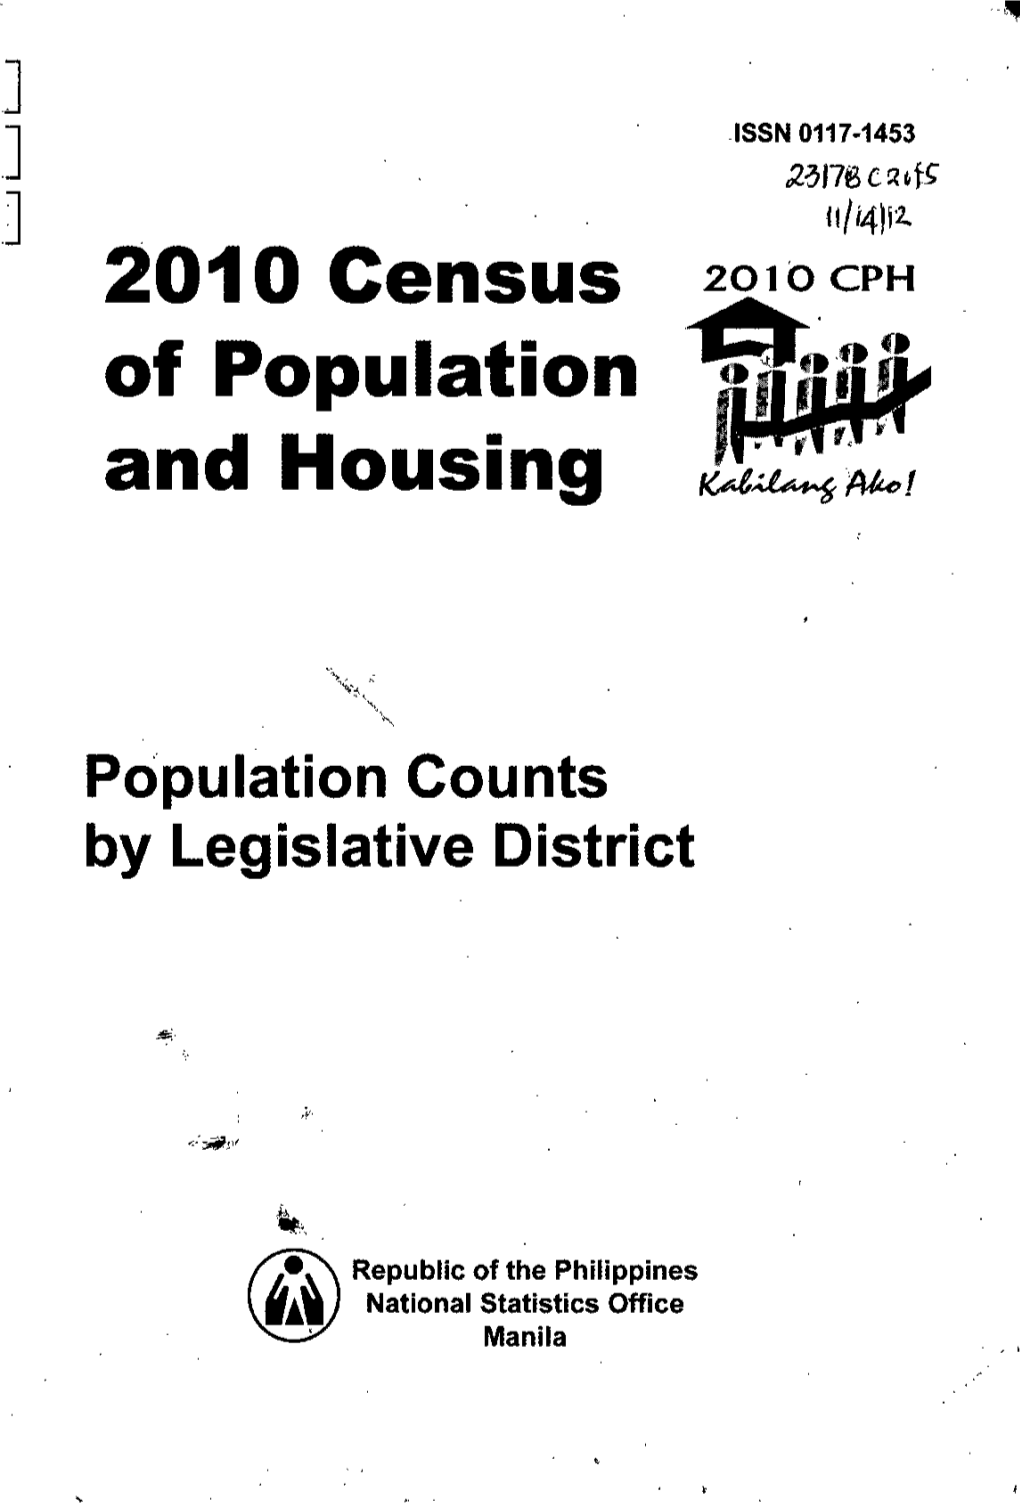 Population Counts by Legislative District